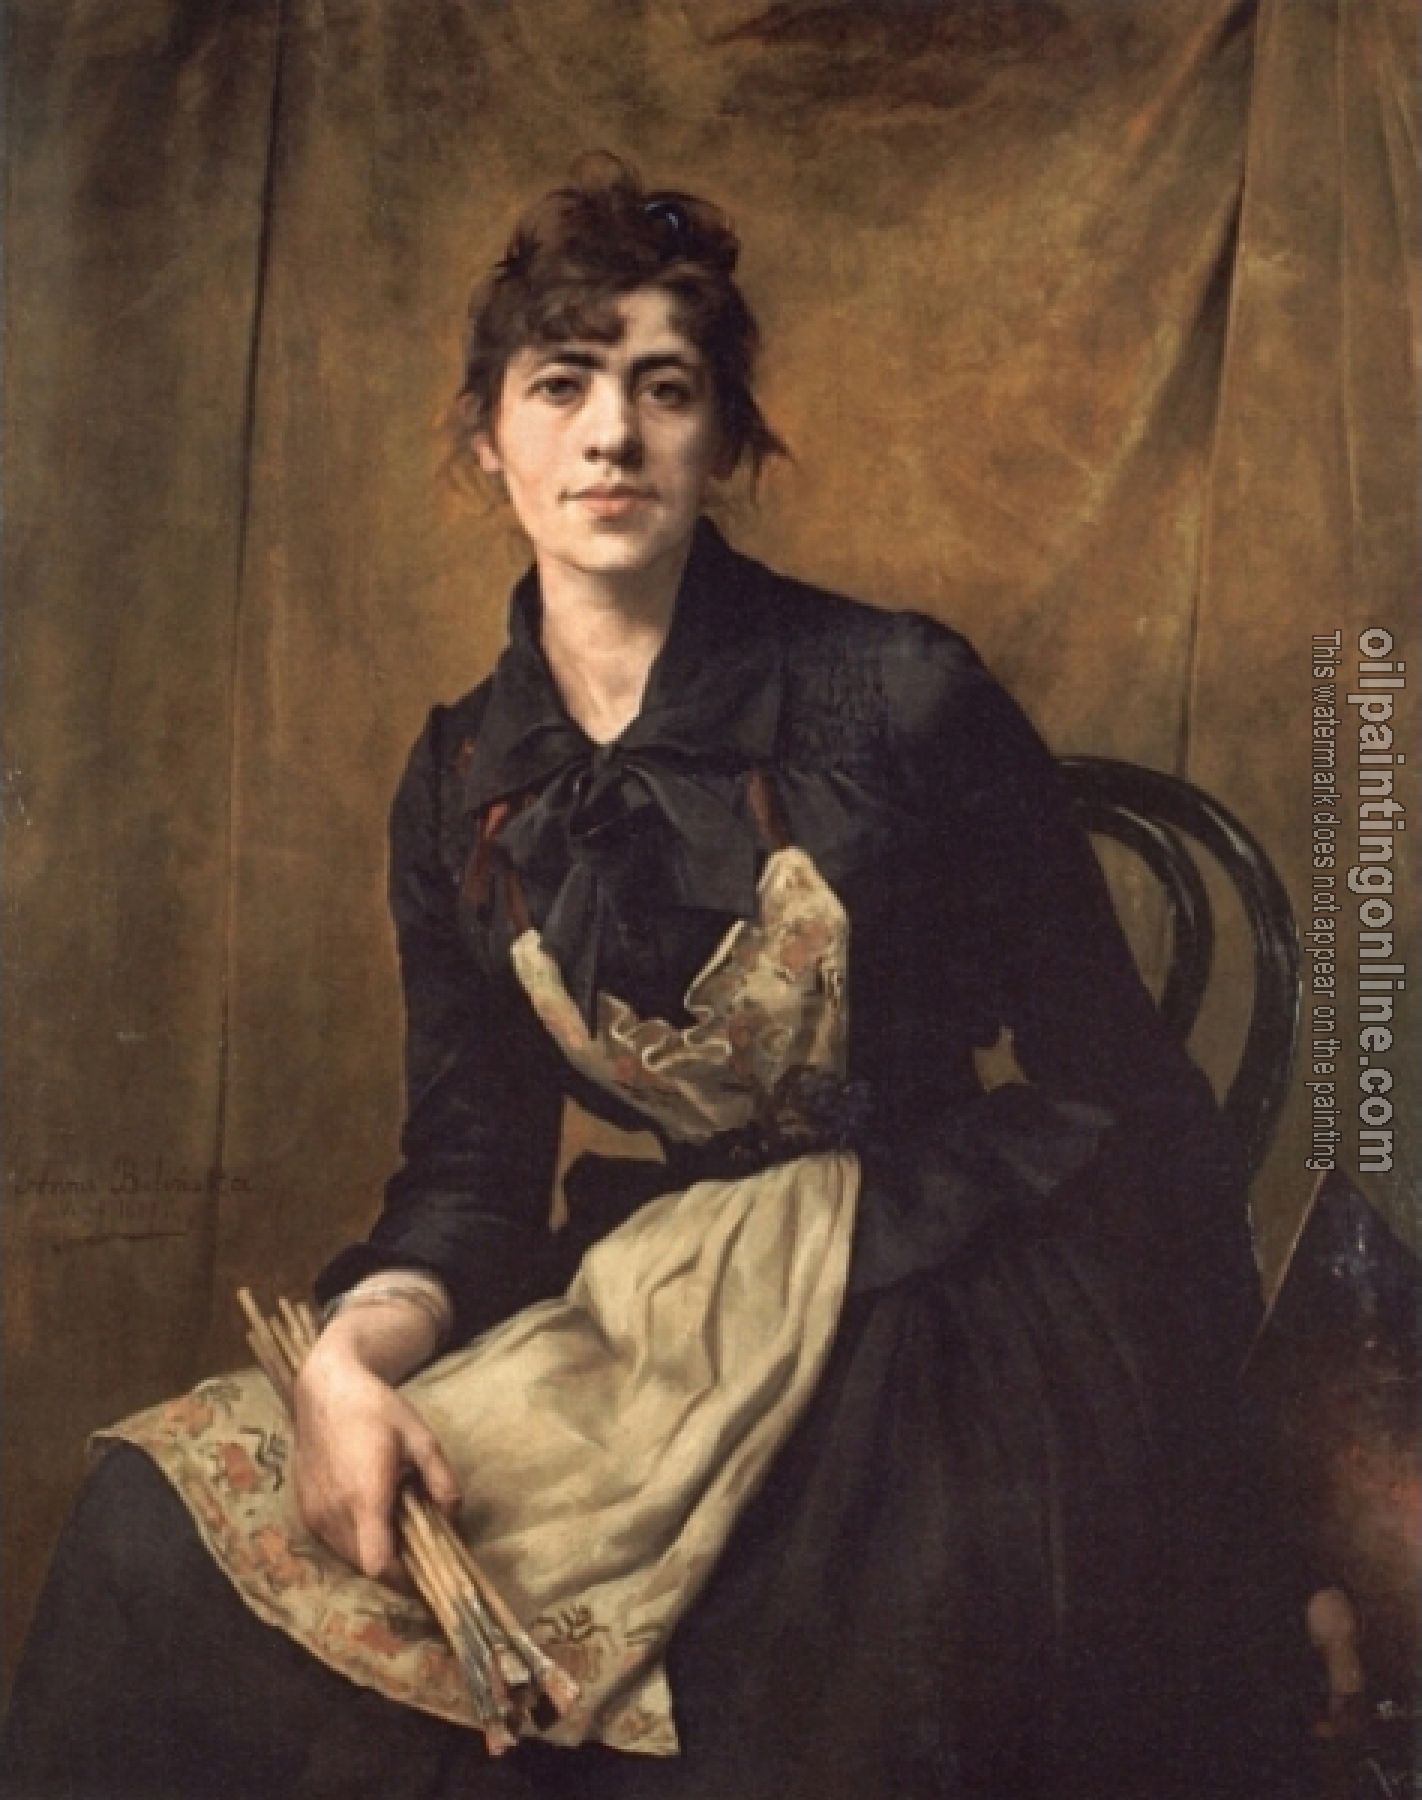 Bilinska-Bohdanowicz, Anna - Self Portrait with Apron and Brushes